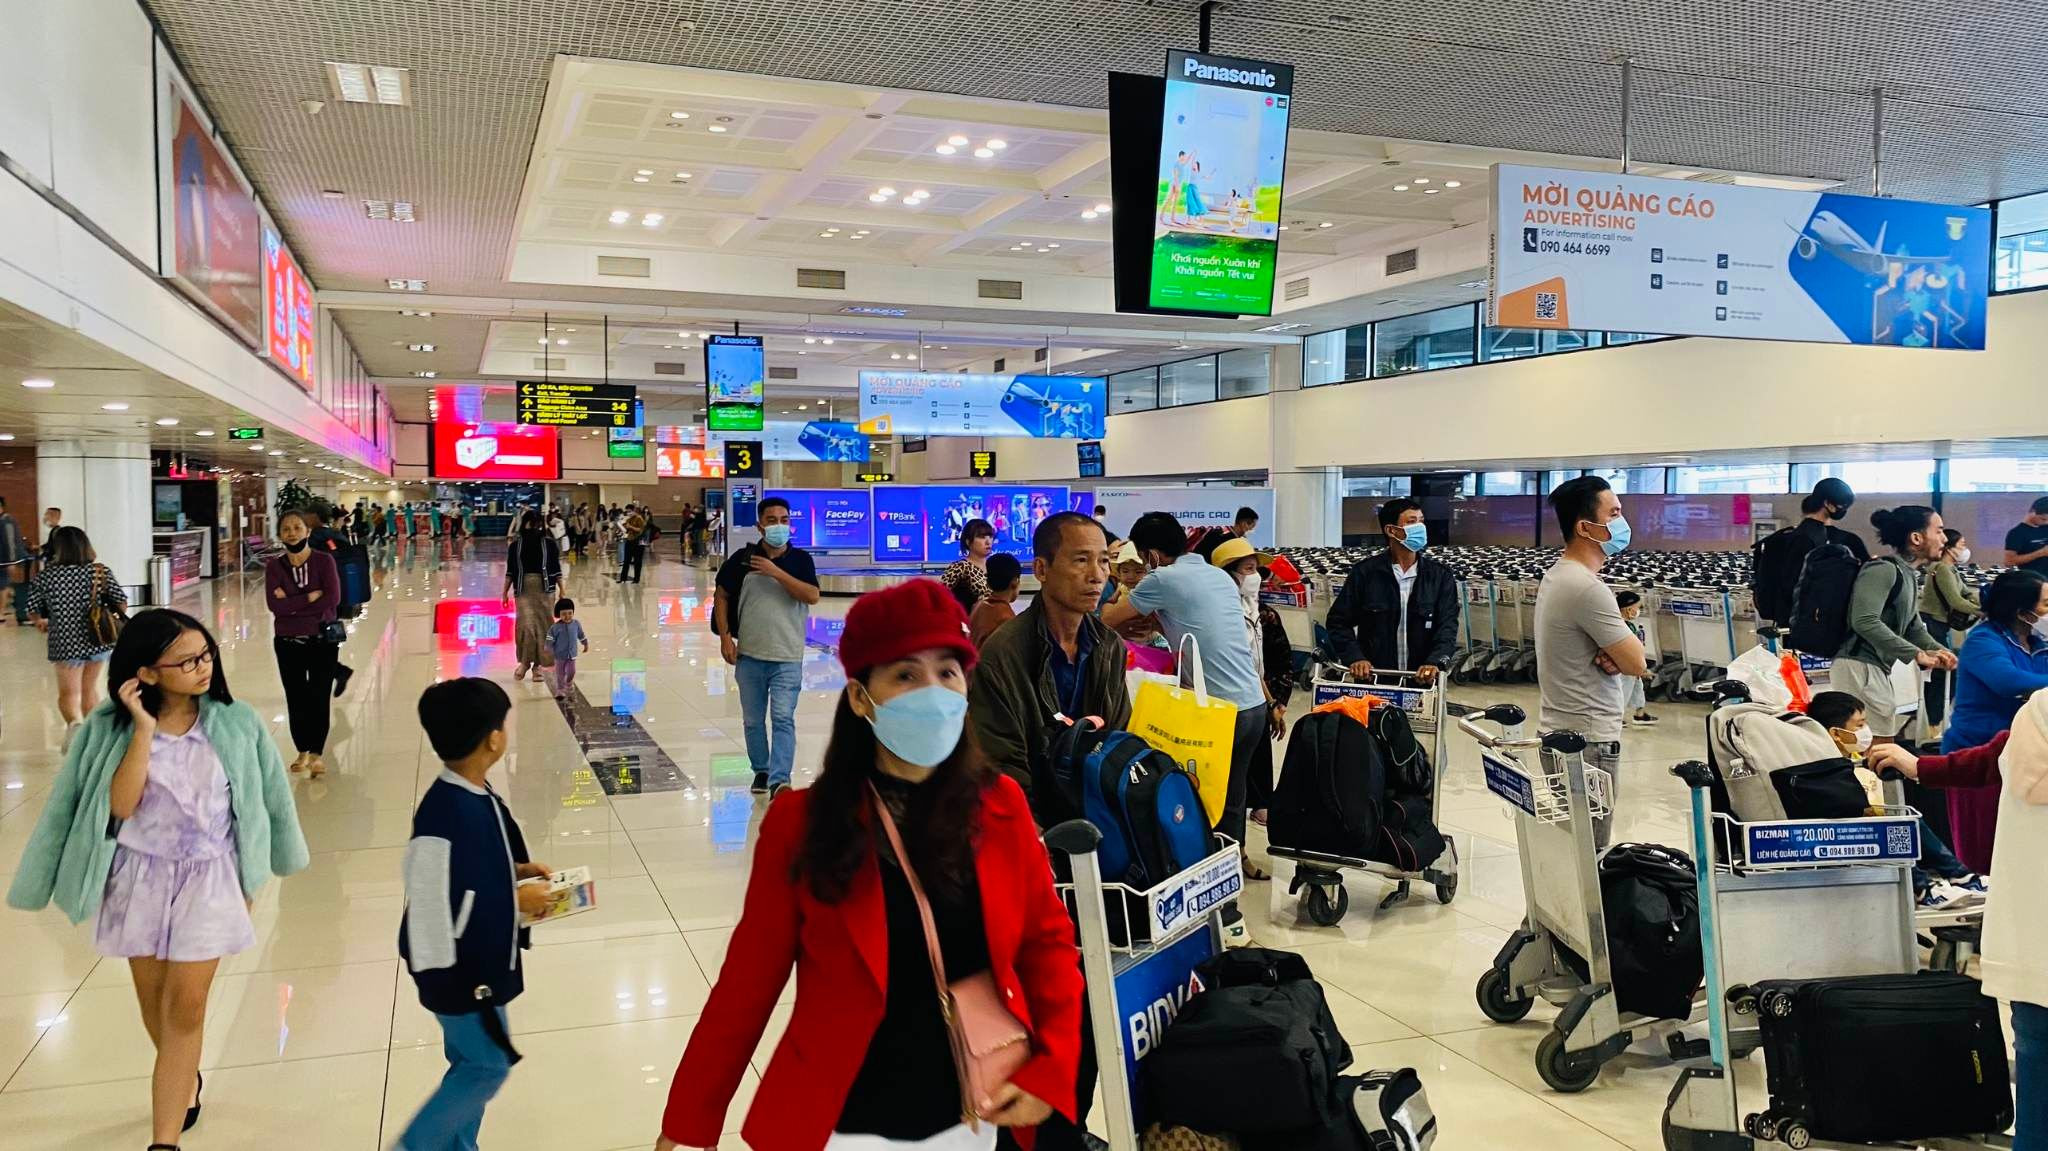 Noi Bai Airport begins to pilot facial recognition technology